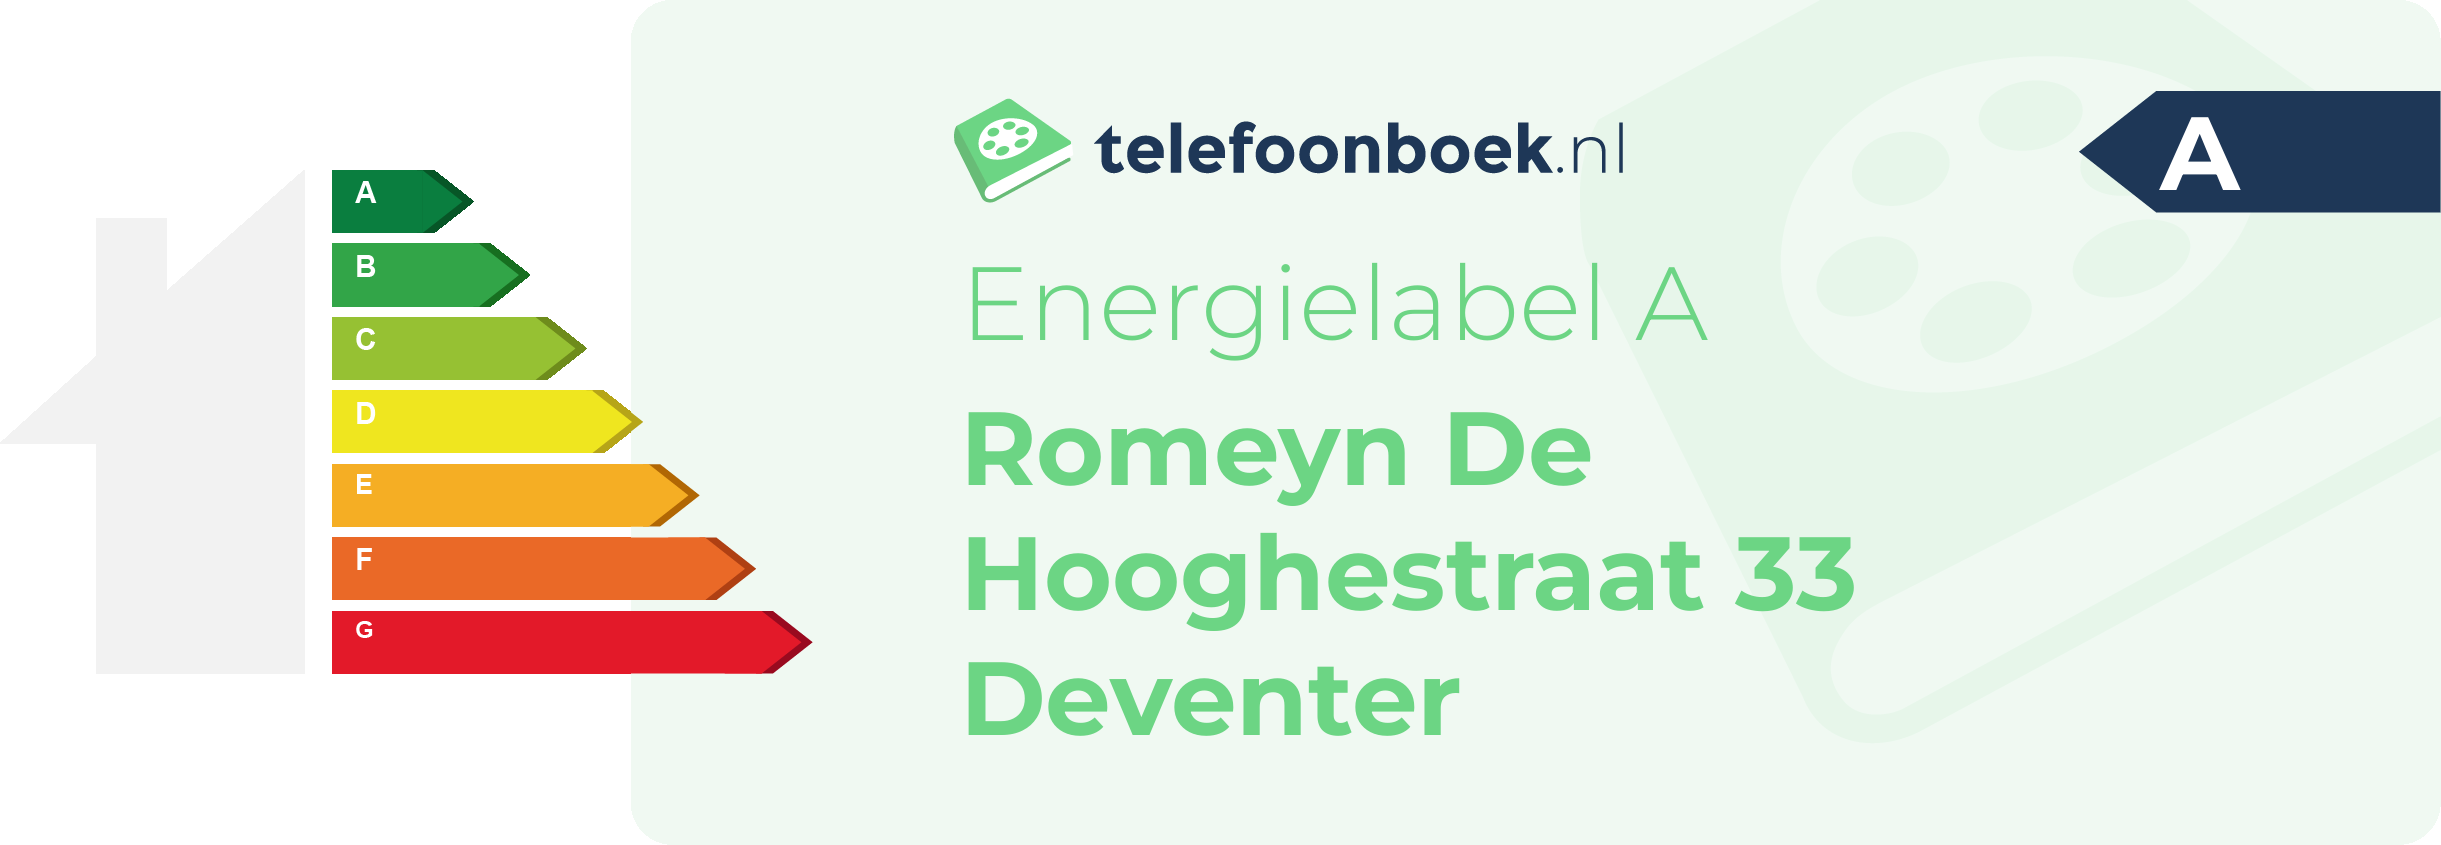 Energielabel Romeyn De Hooghestraat 33 Deventer